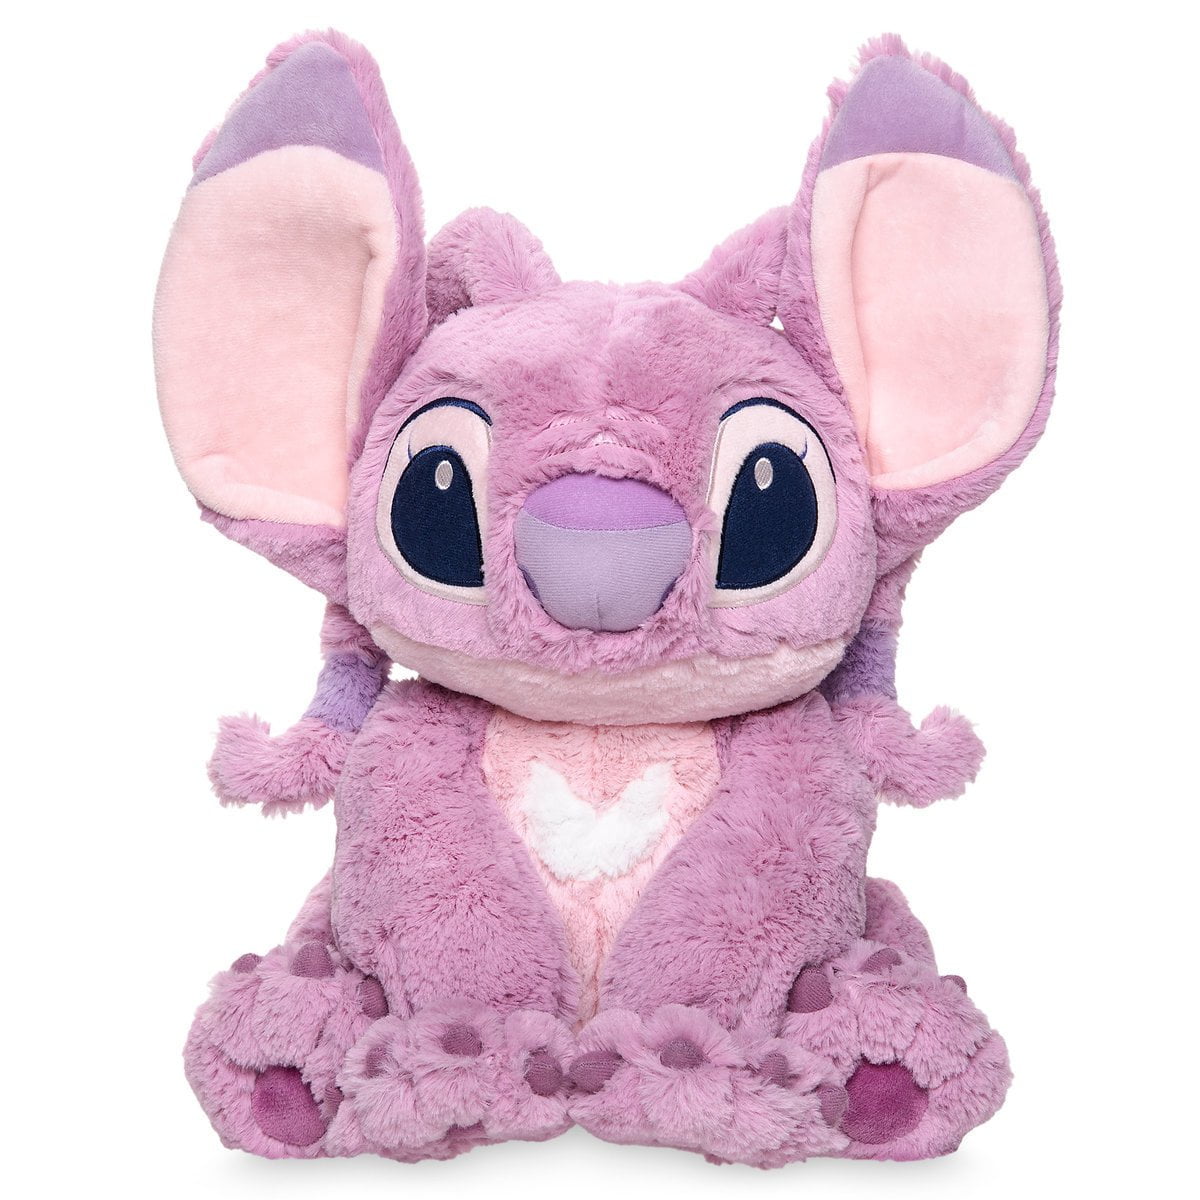 Soft Plush Toy New Disney Store Pink Angel Lilo and Stitch 